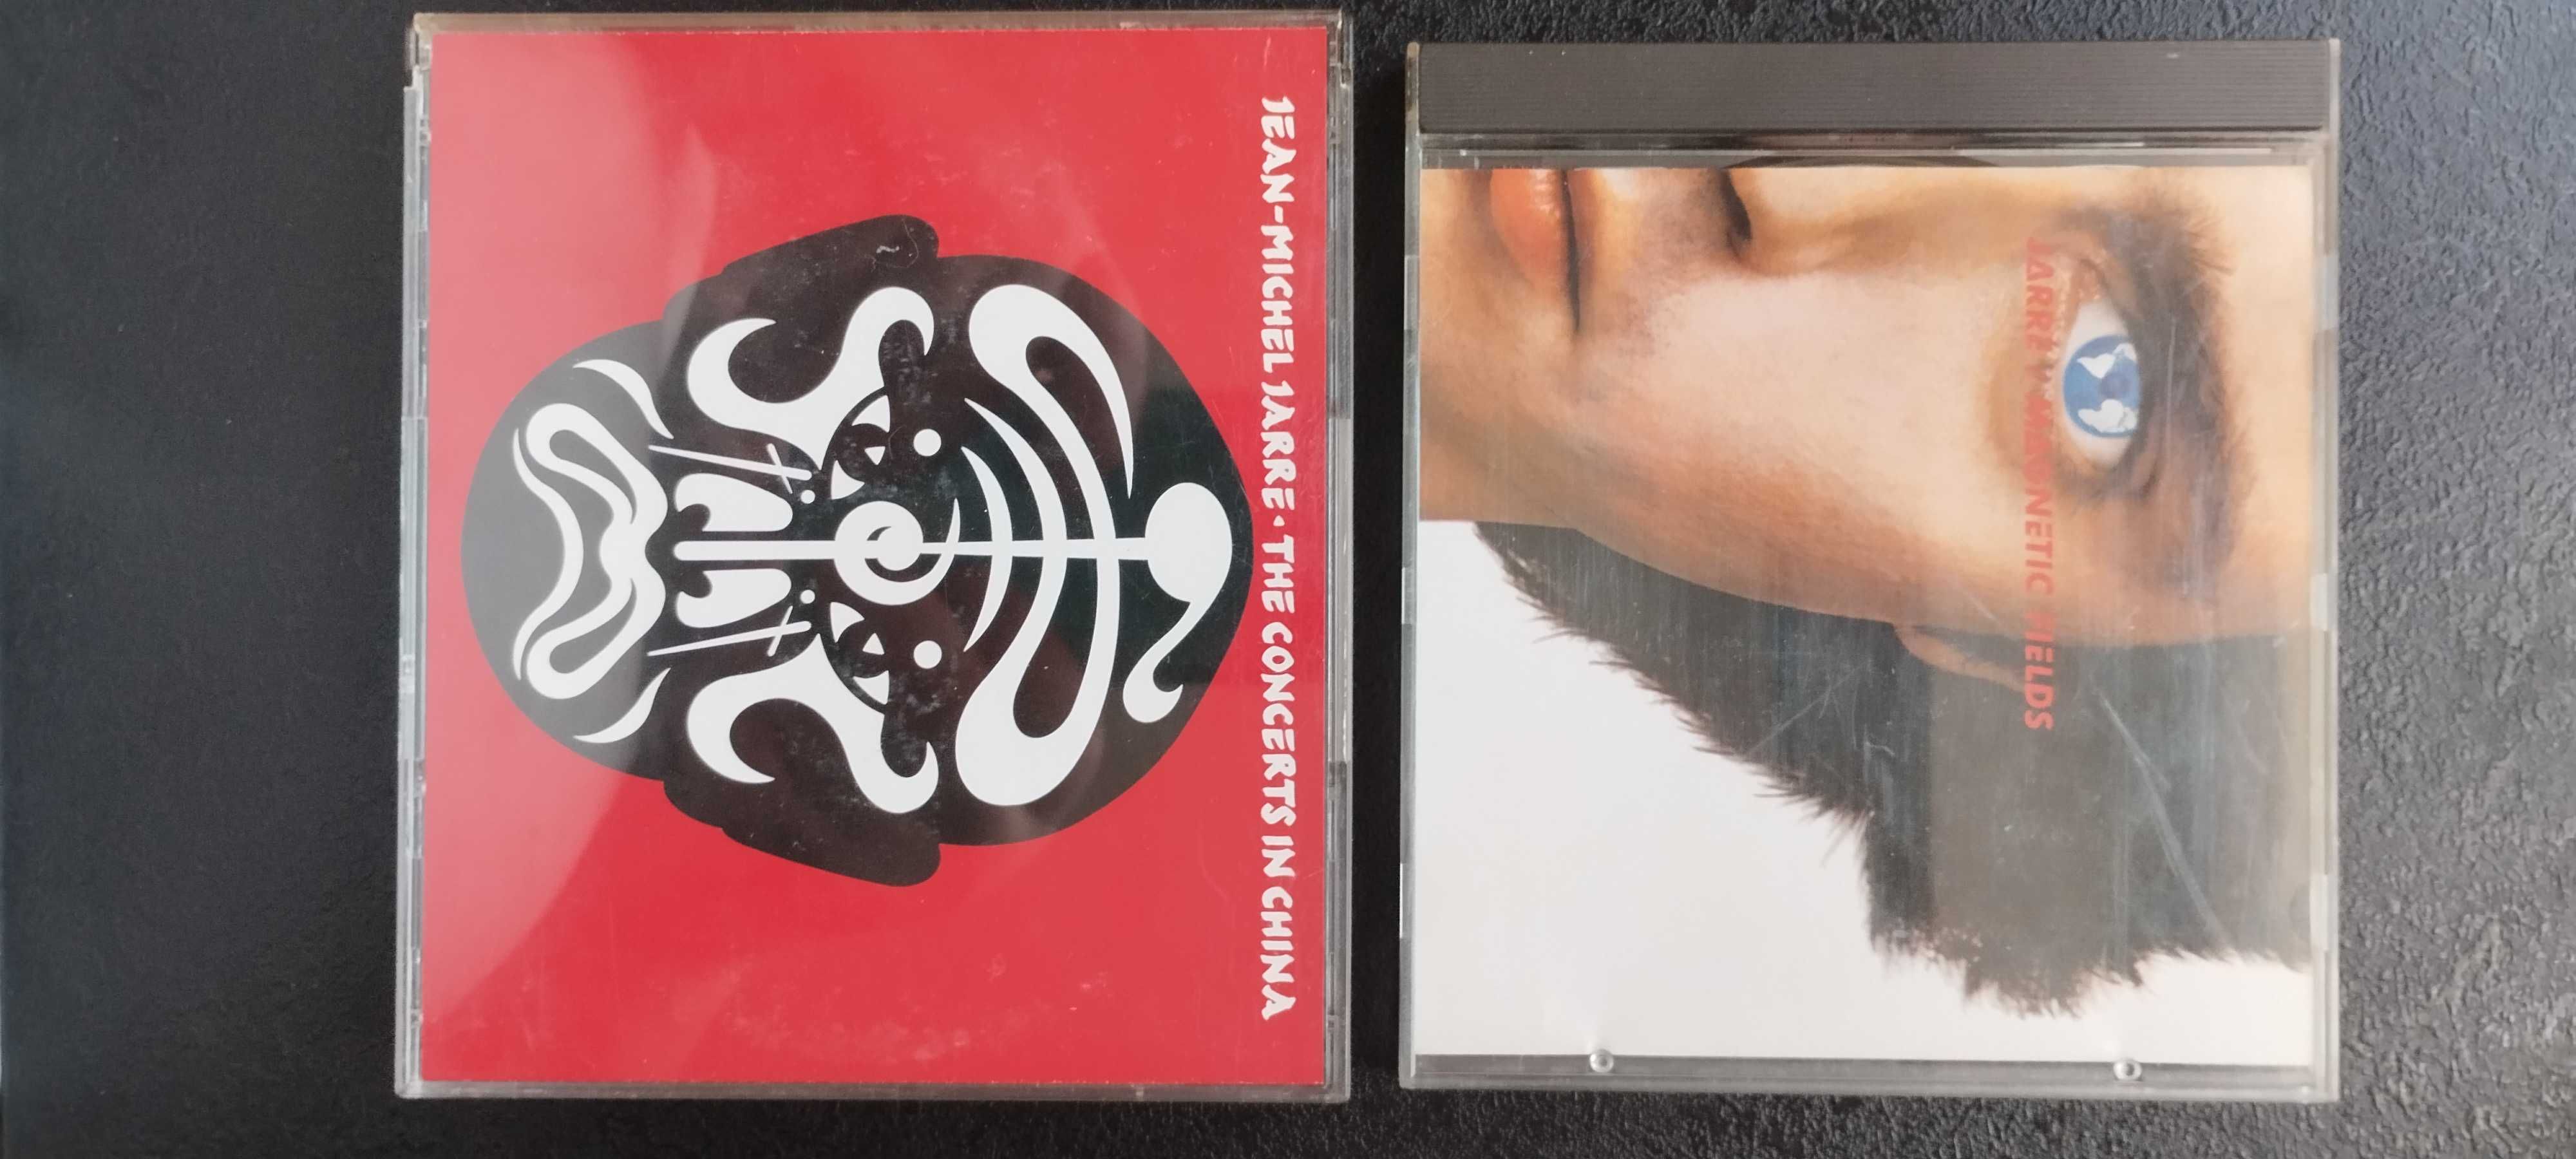 Jean Michael Jarre 15 płyt kompaktowych